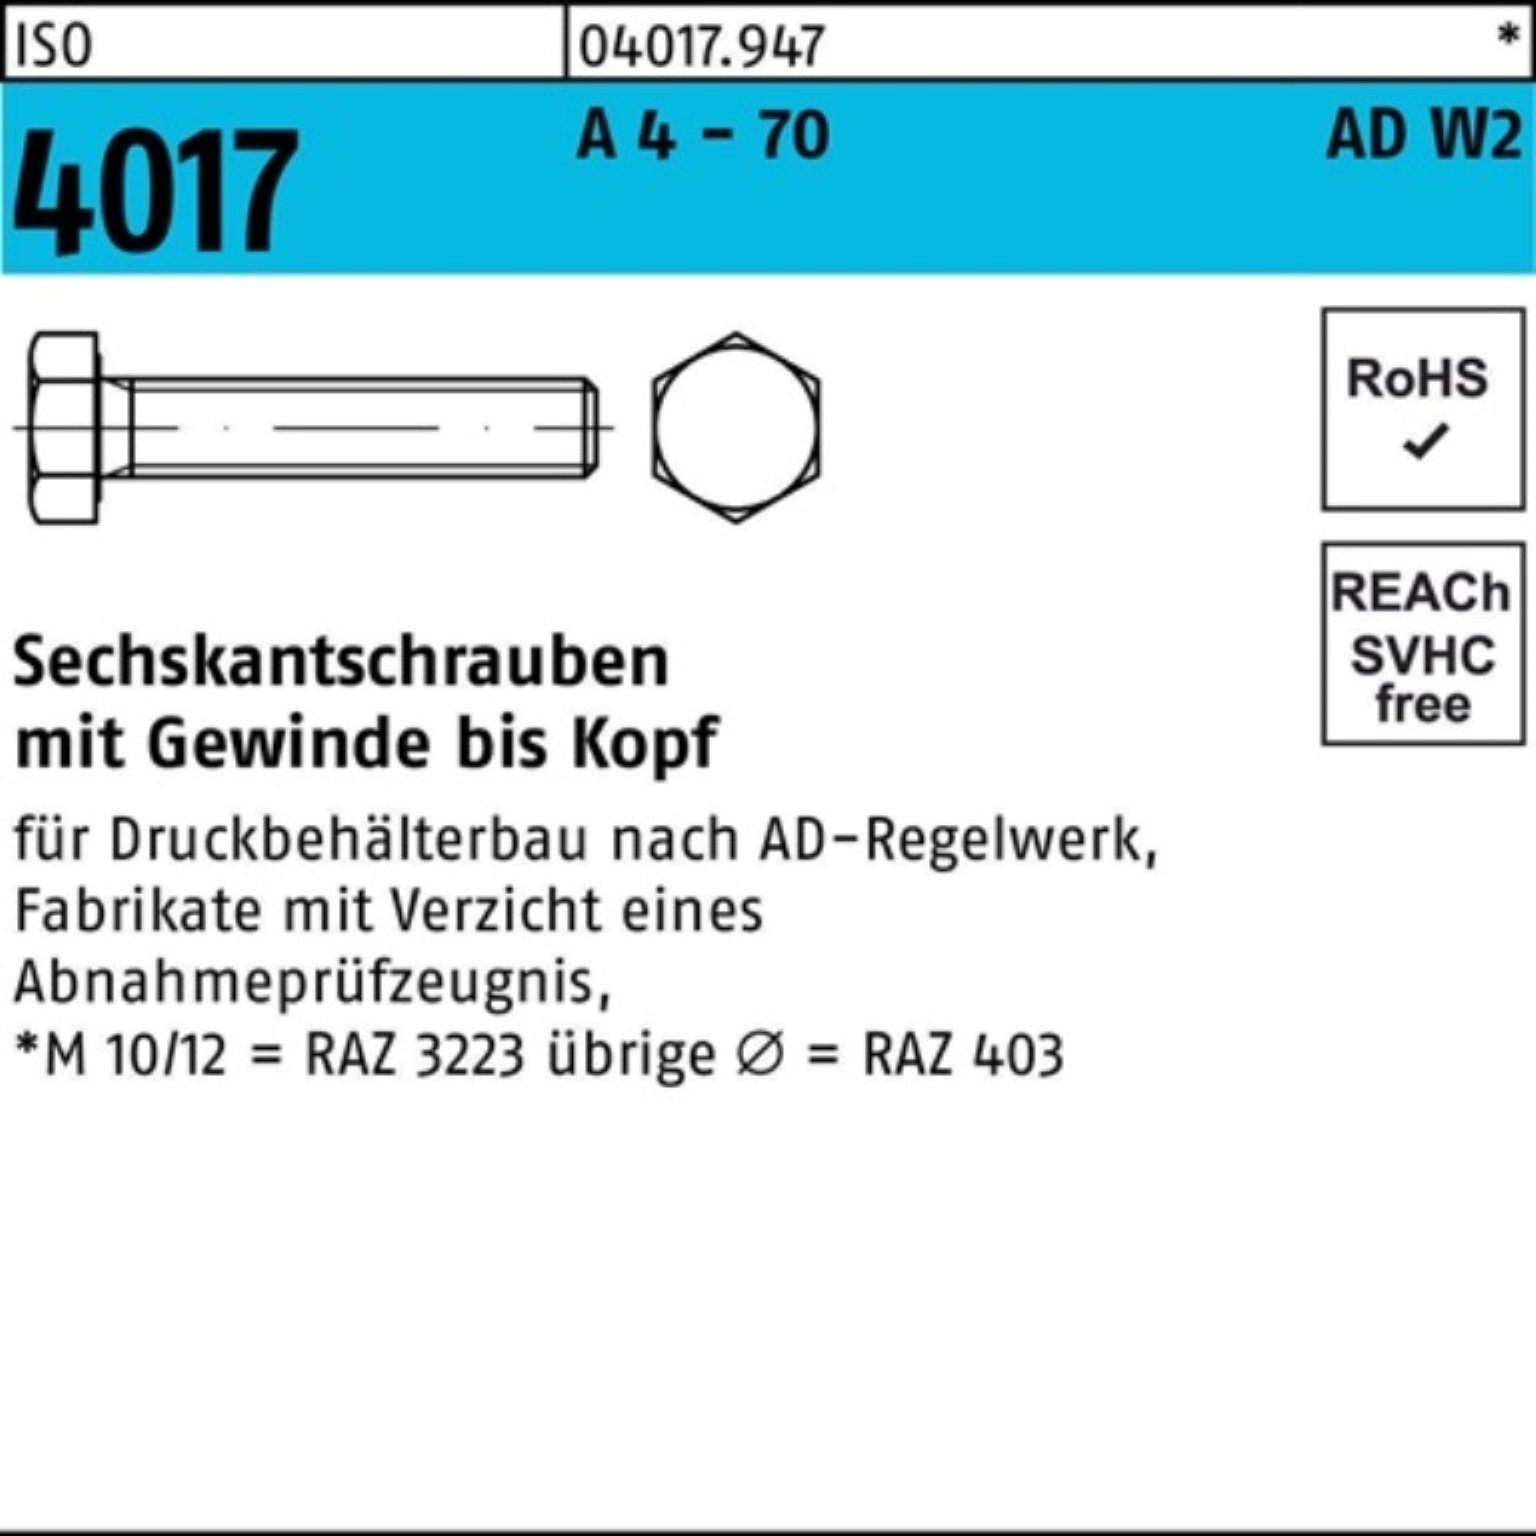 Bufab Sechskantschraube 200er M8x VG 70 200 Sechskantschraube A St 4017 Pack ISO - AD-W2 25 4